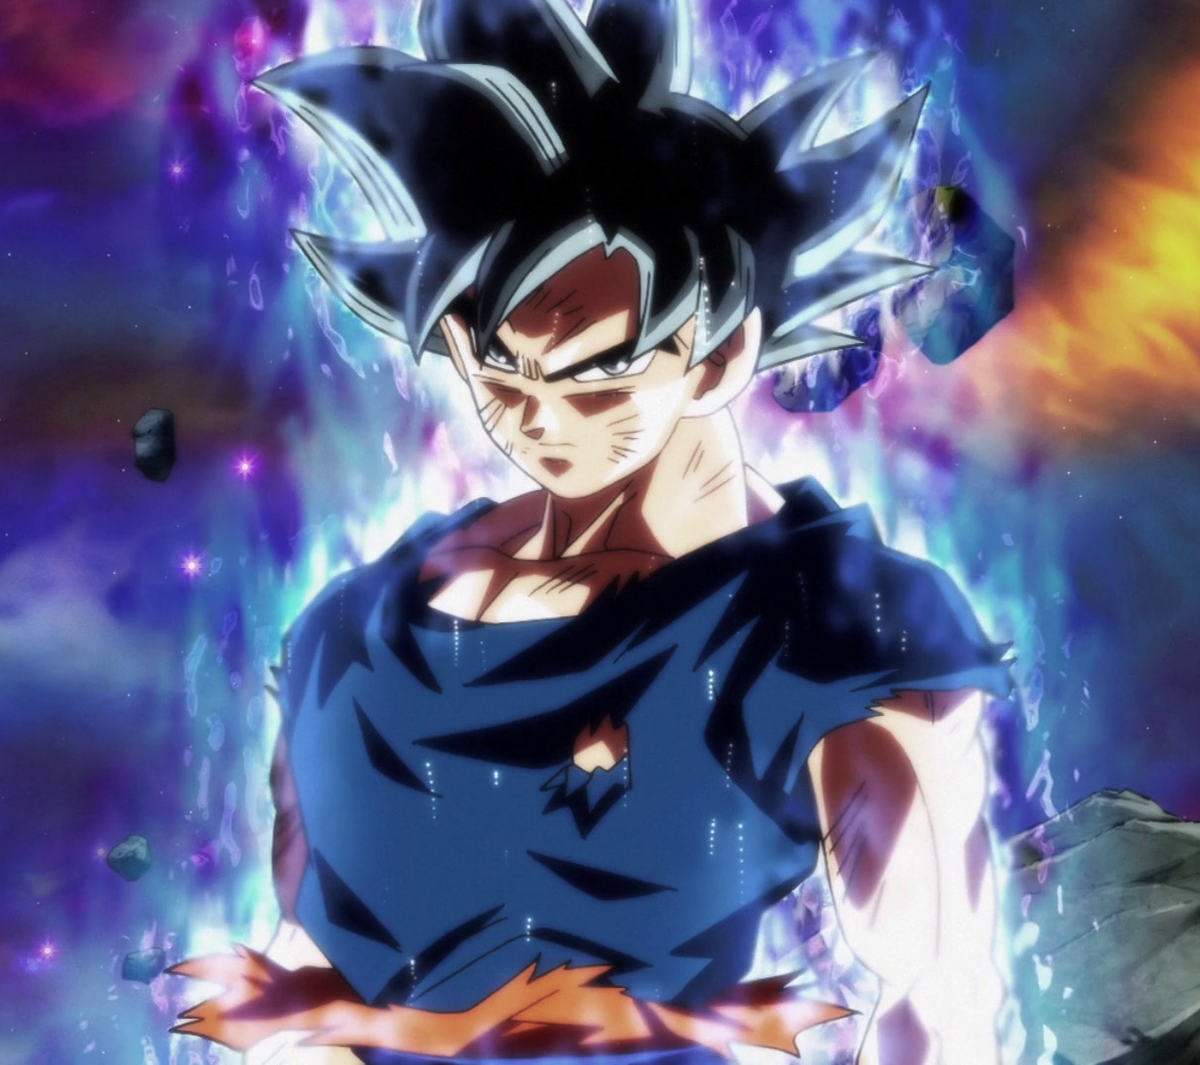 Dragon Ball Super Reveals Goku's Ultra Instinct and Vegeta's Ultra